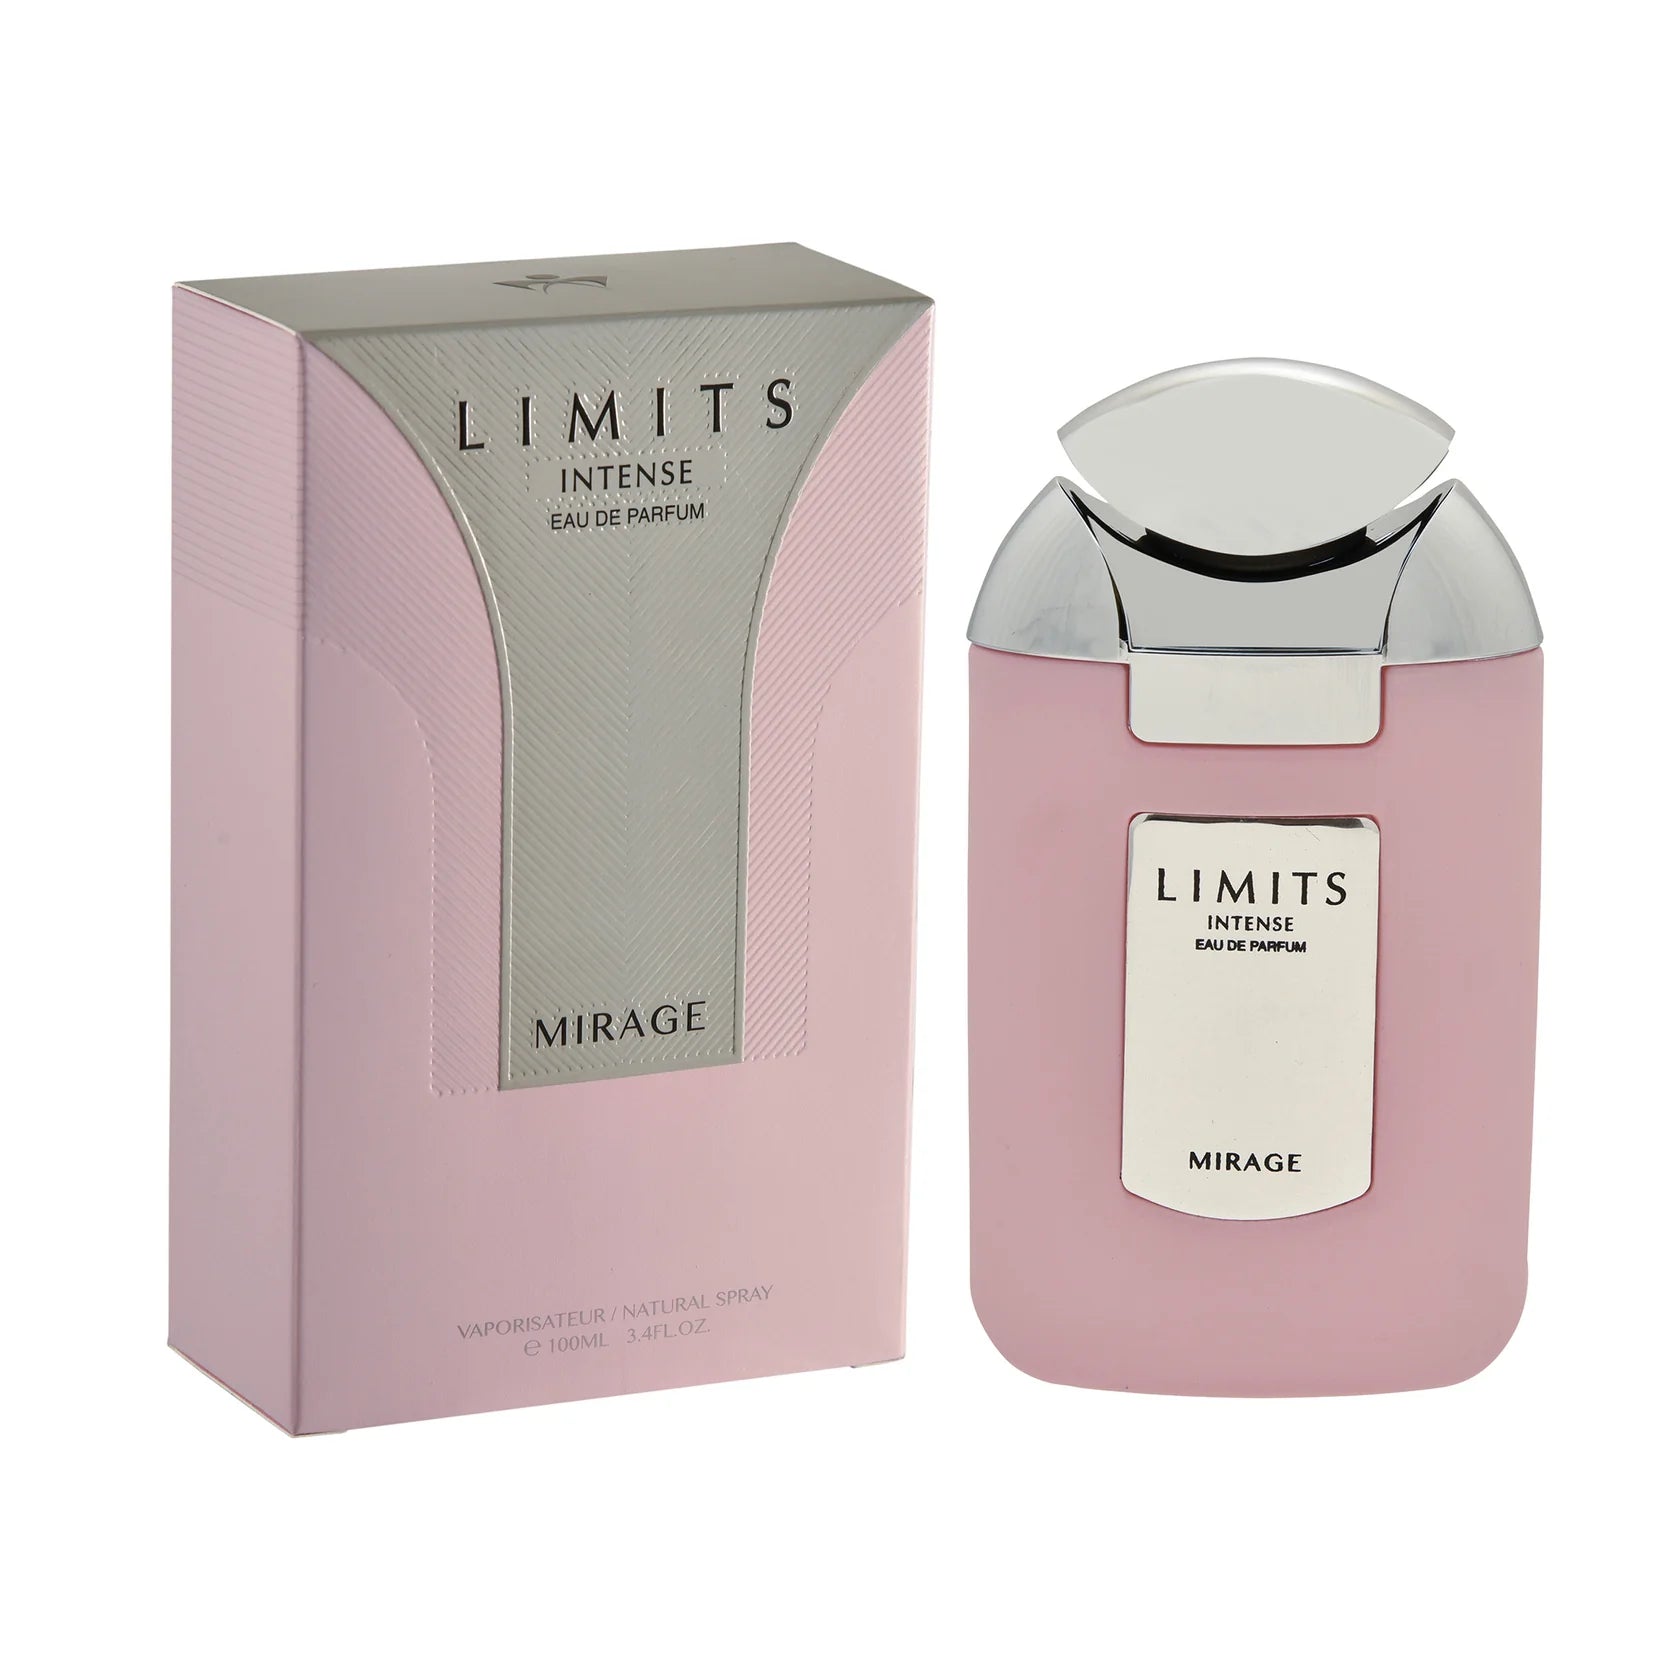 Limits Intense EDP (100ml) spray perfume by Mirage Perfumes